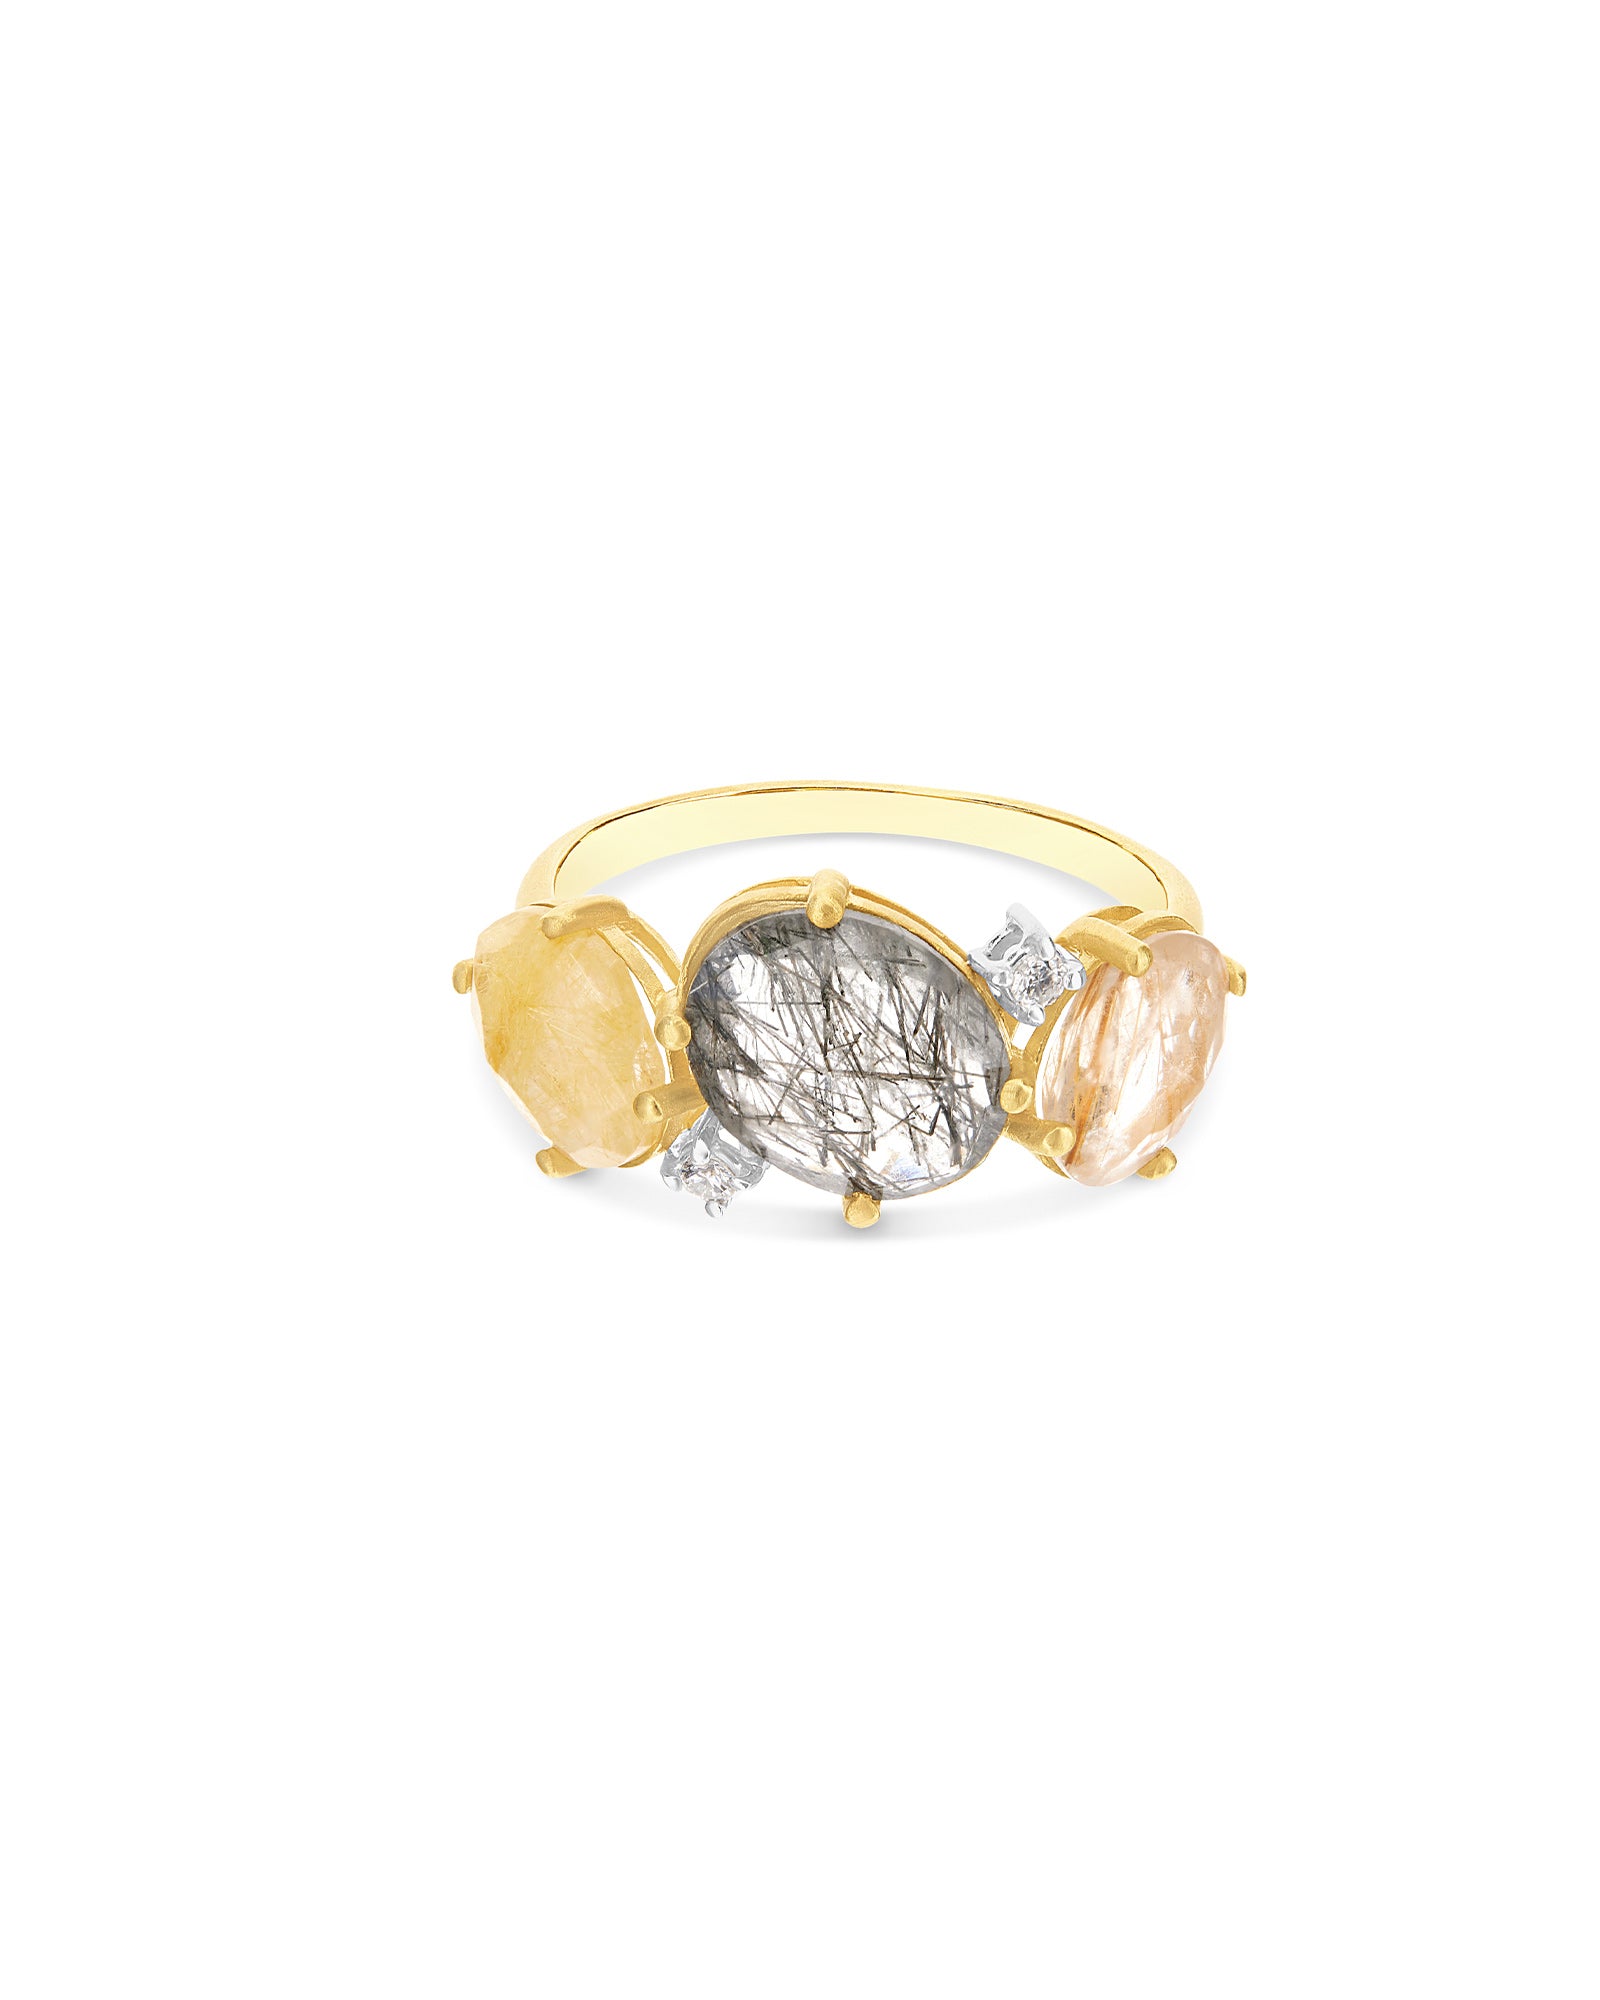 "Ipanema" Grey and yellow rutilated quartz ring